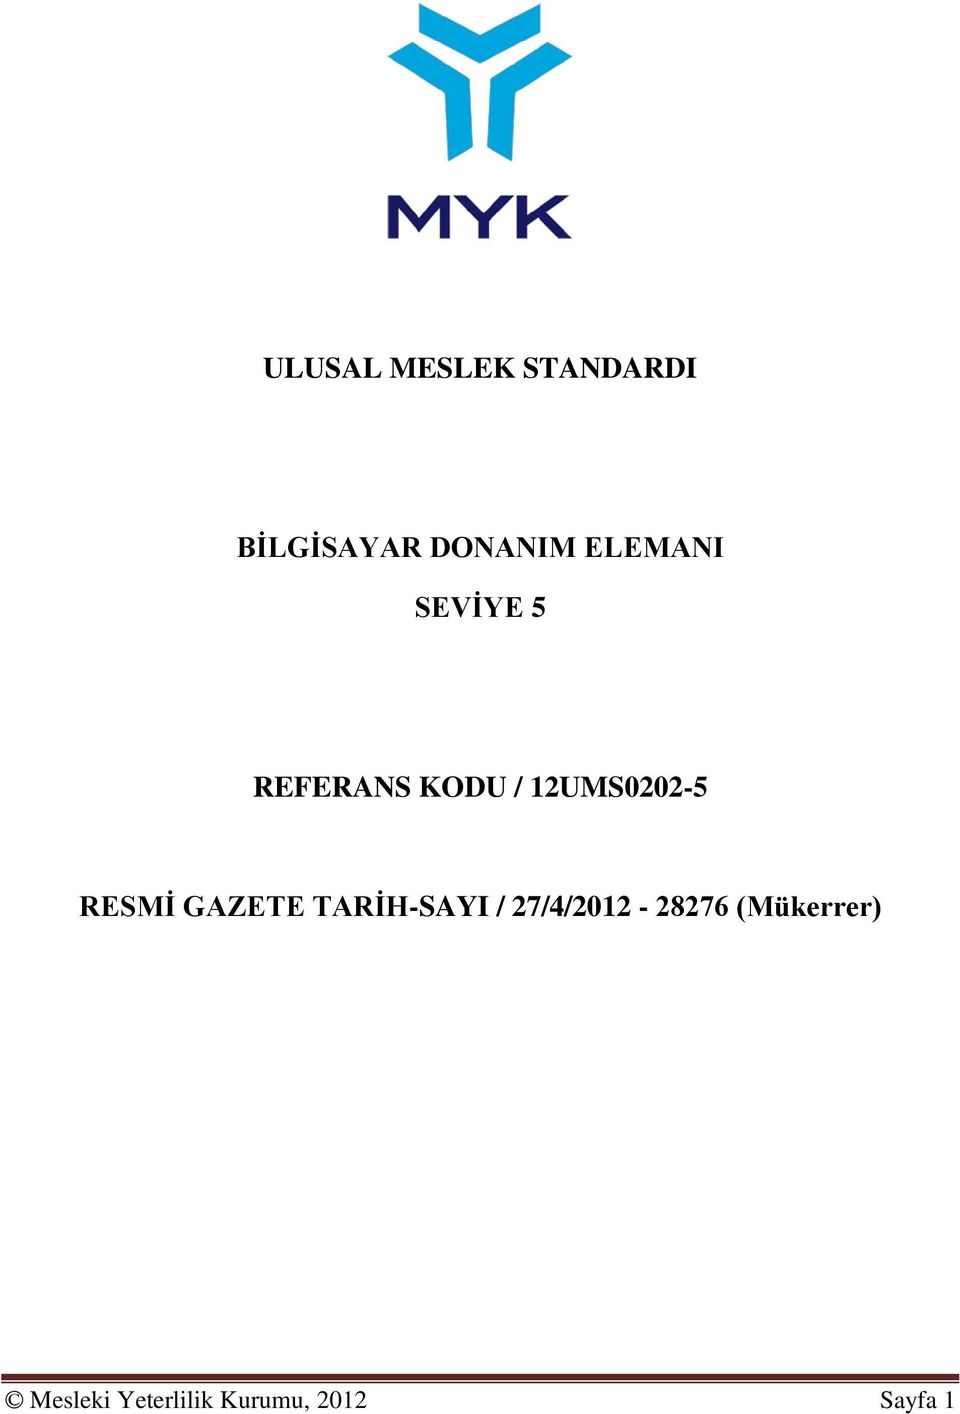 RESMİ GAZETE TARİH-SAYI / 27/4/2012-28276